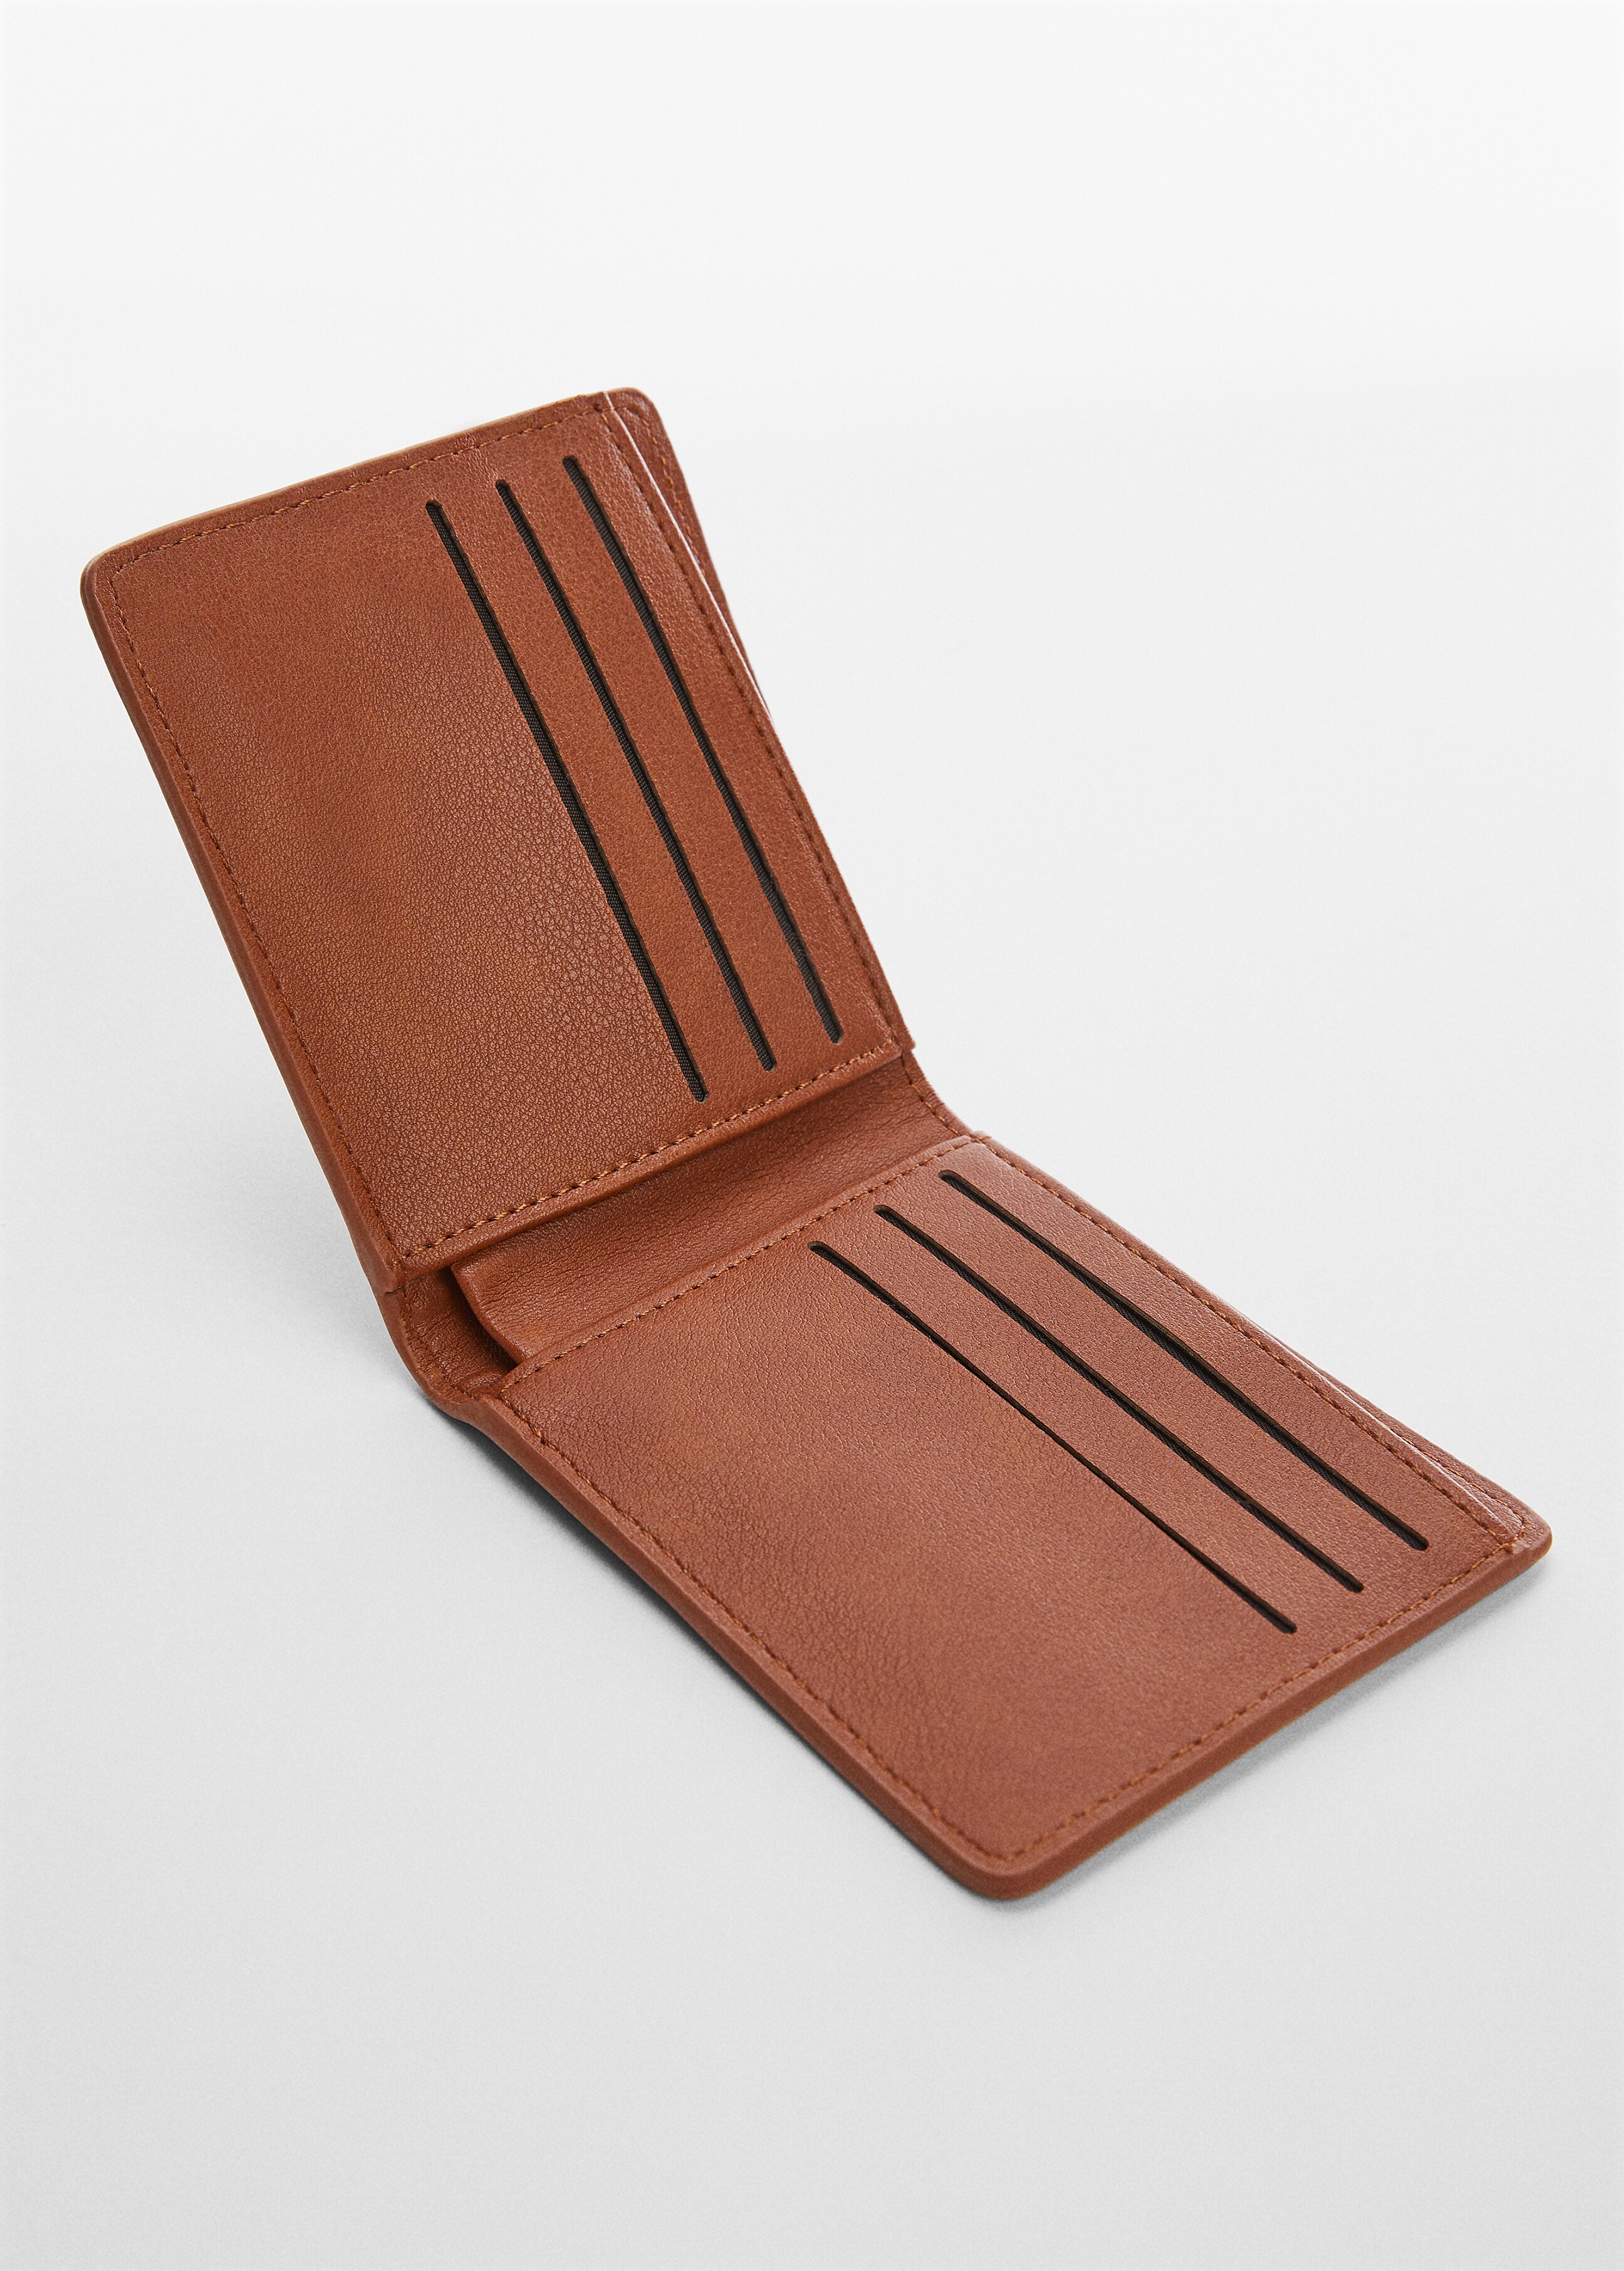 Plain leather wallet - Medium plane